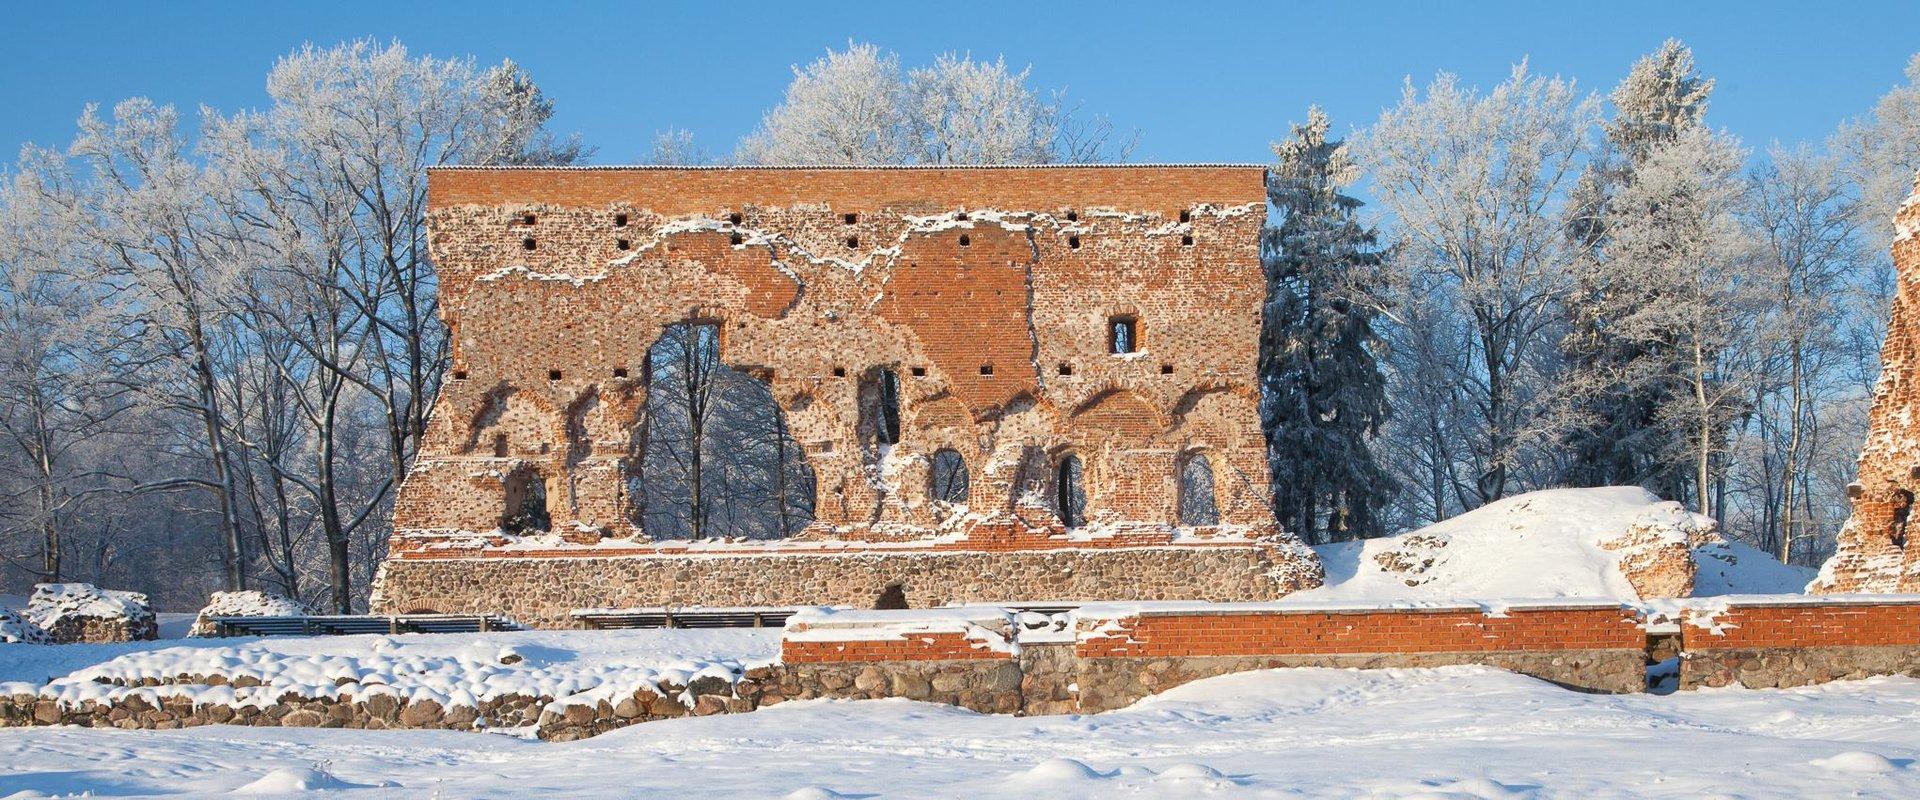 Ruins of the Viljandi Order Castle